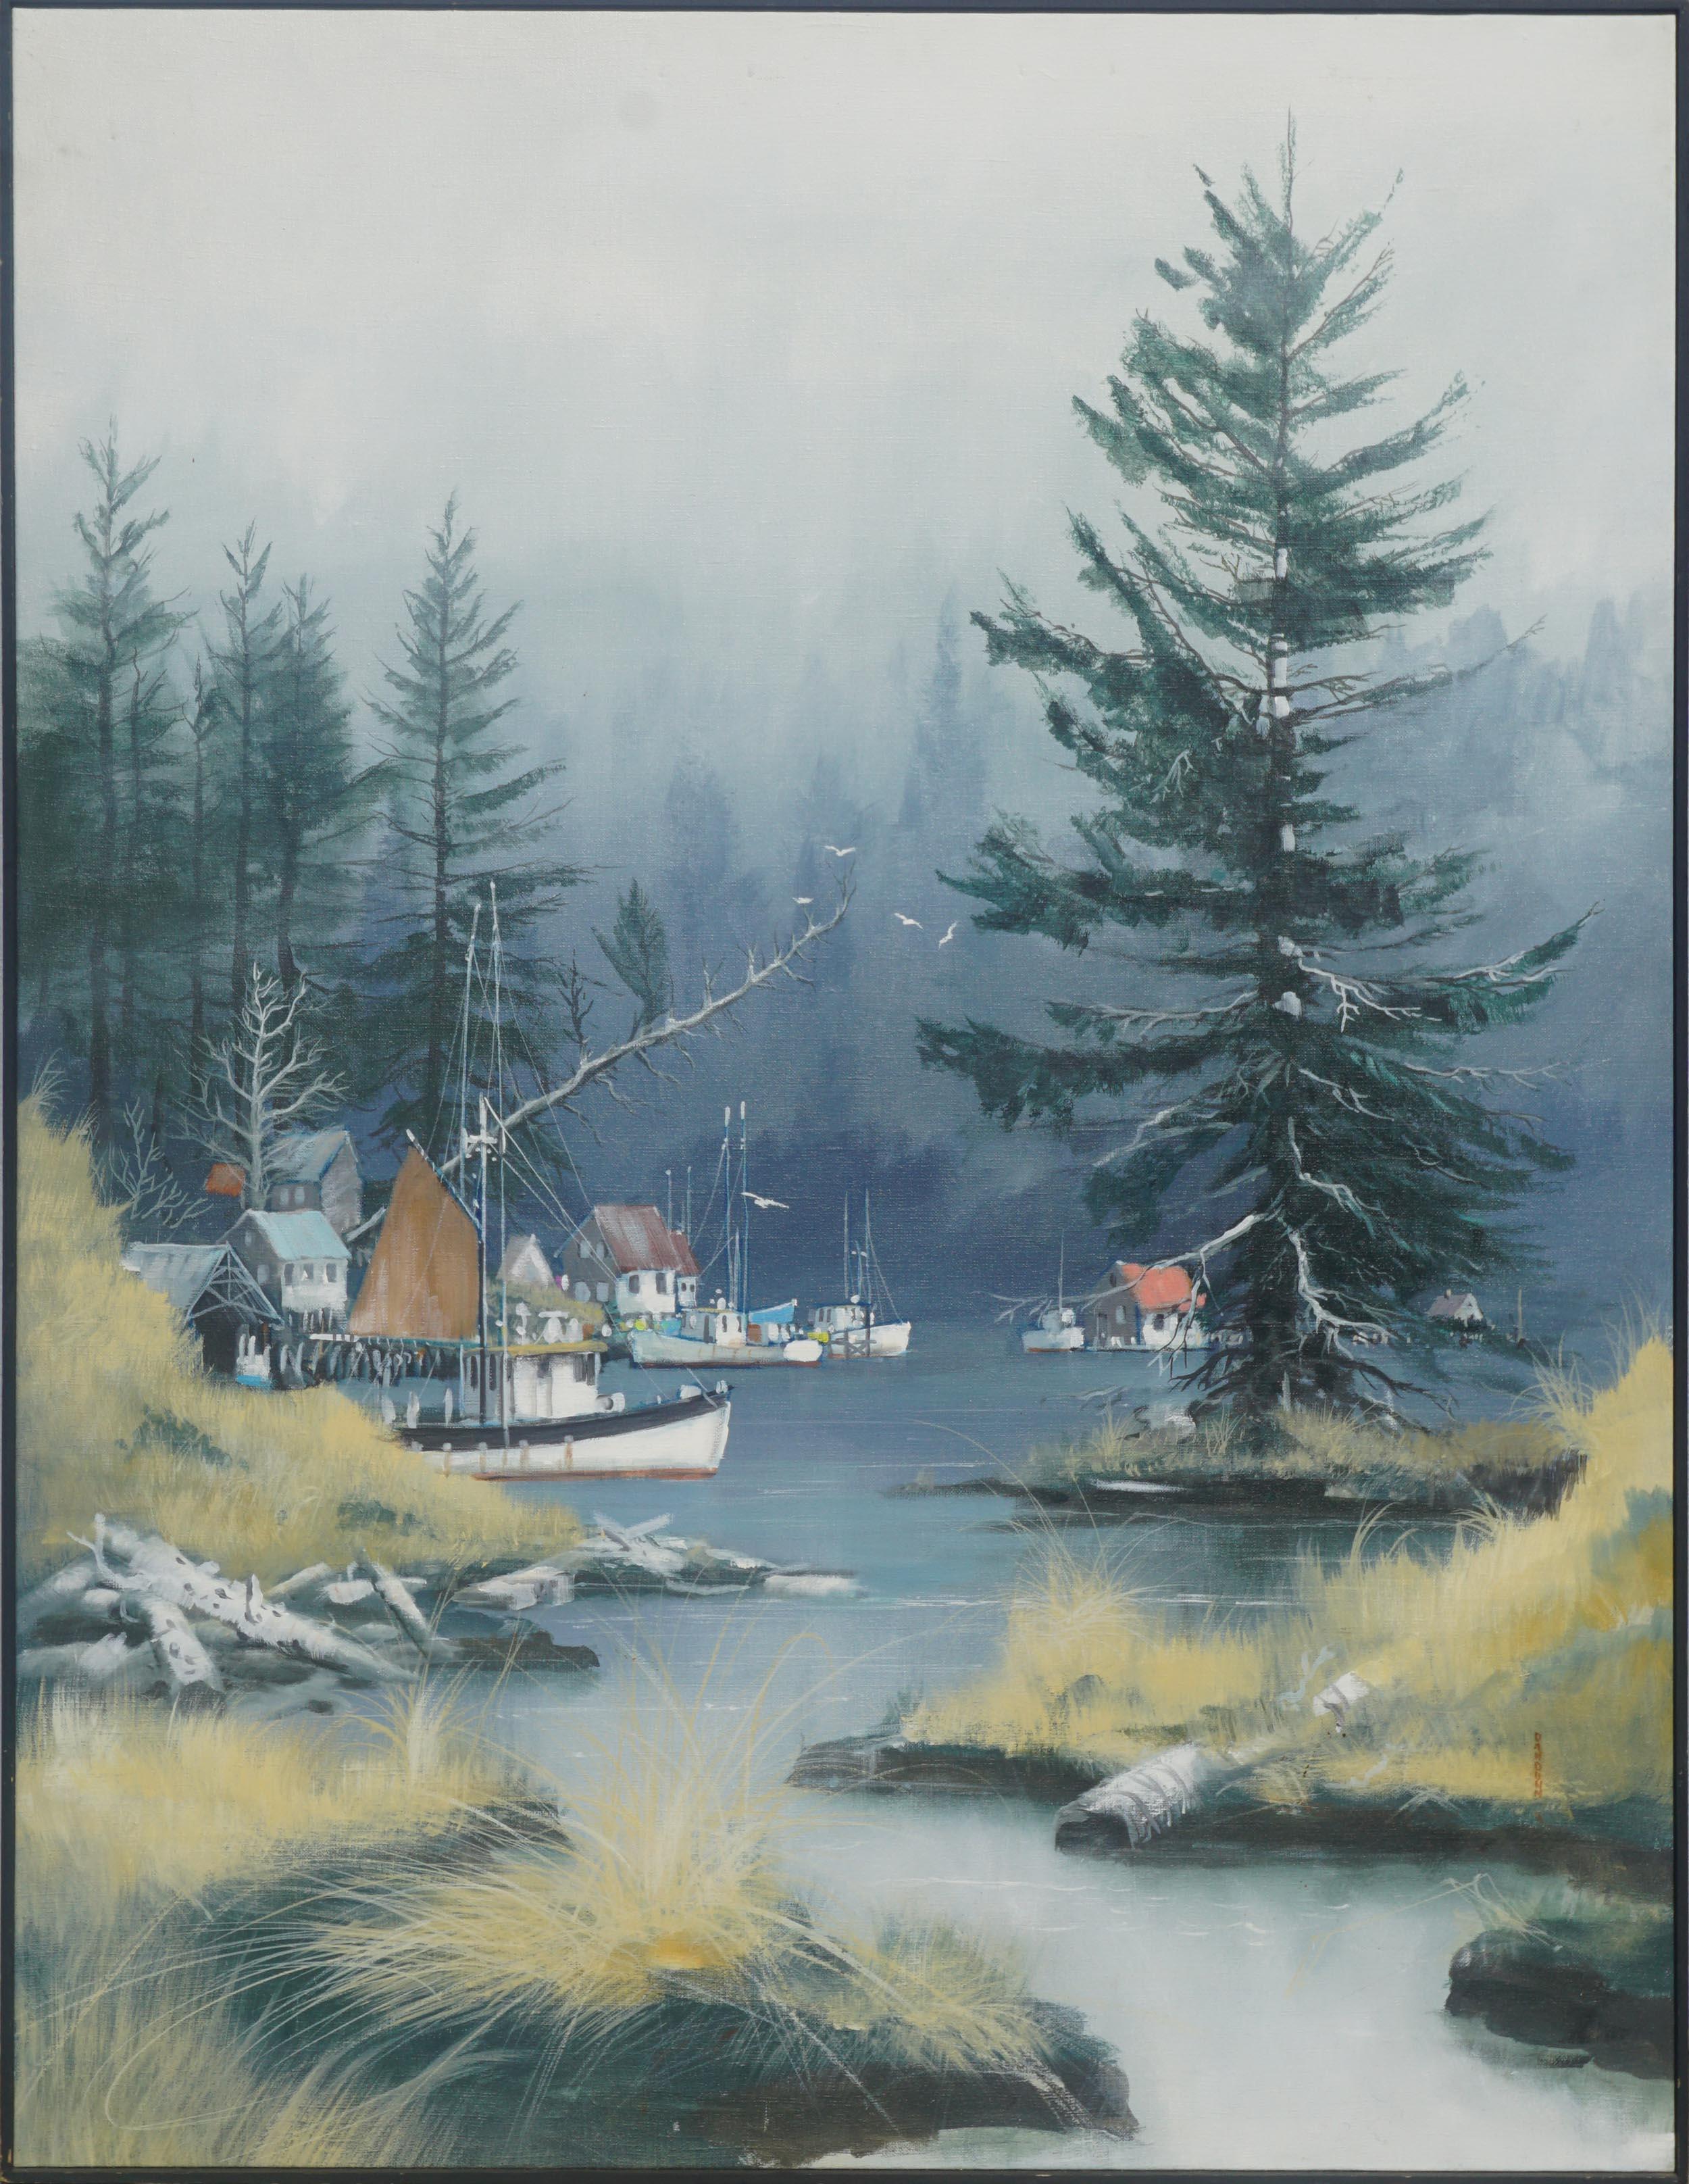 Dan Dunn Landscape Painting - Alaska Fishing Village Landscape